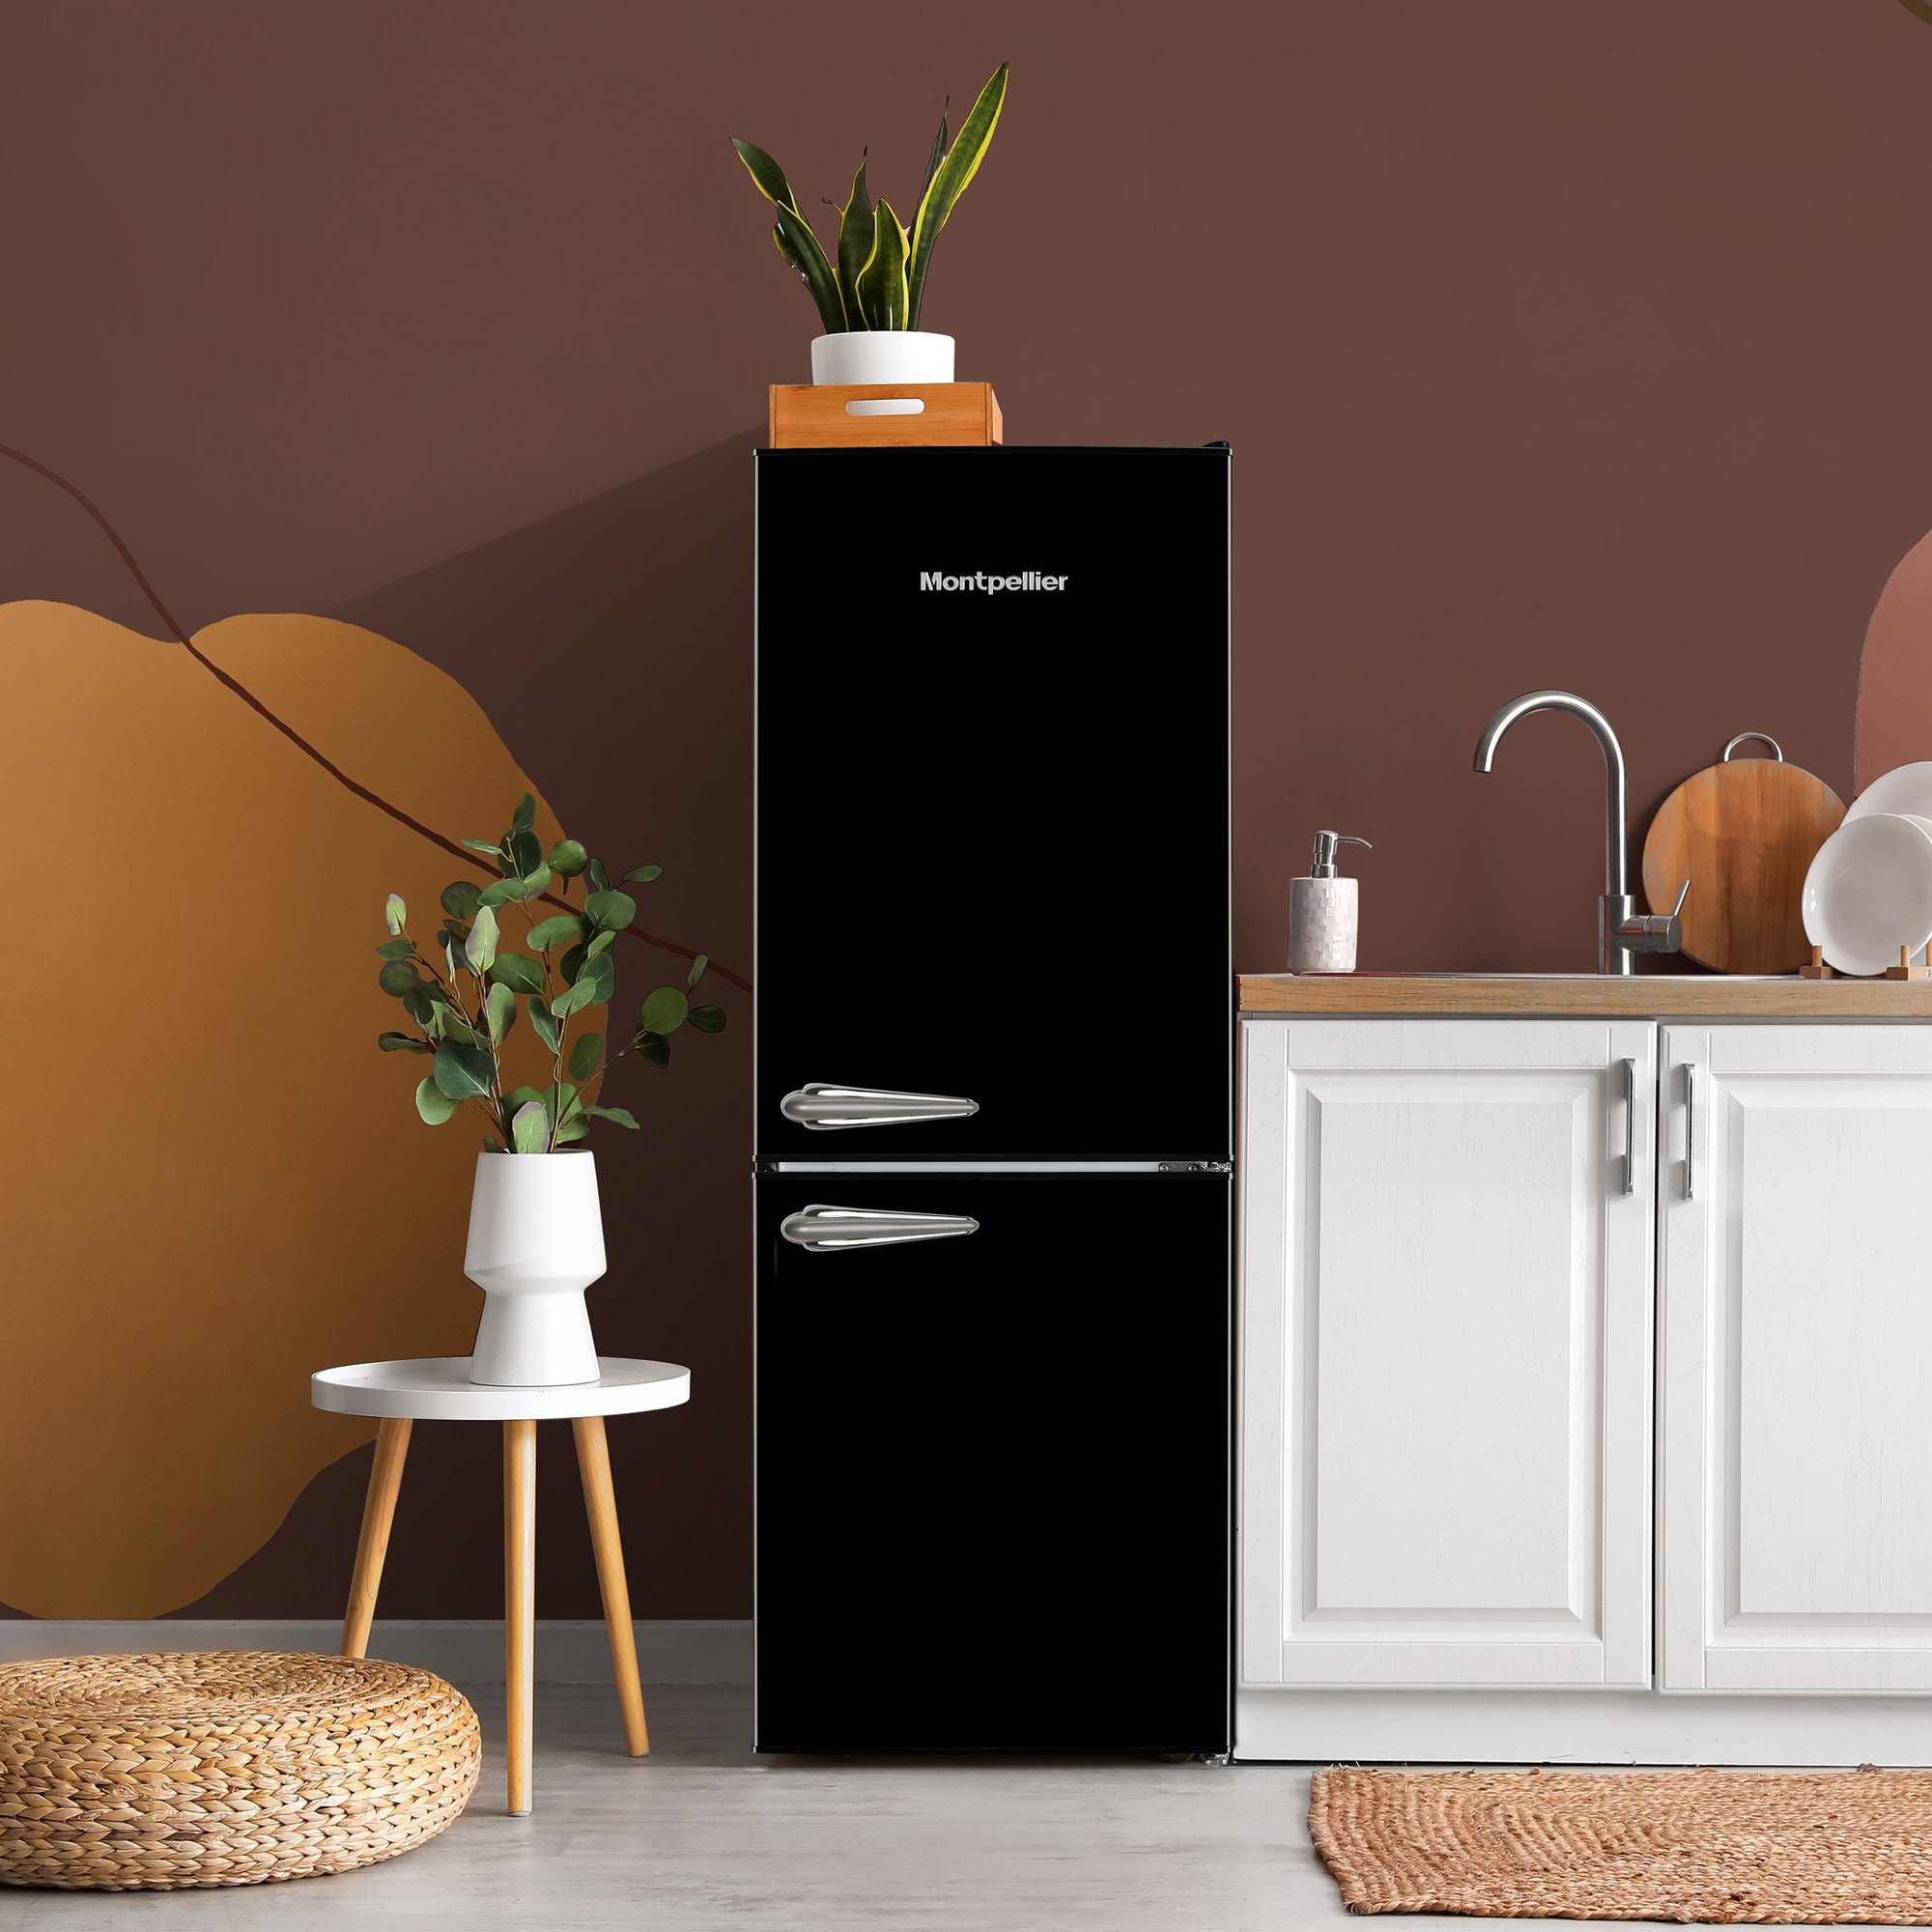 Montpellier MAB145K | Freestanding Retro Style Fridge Freezer – Black